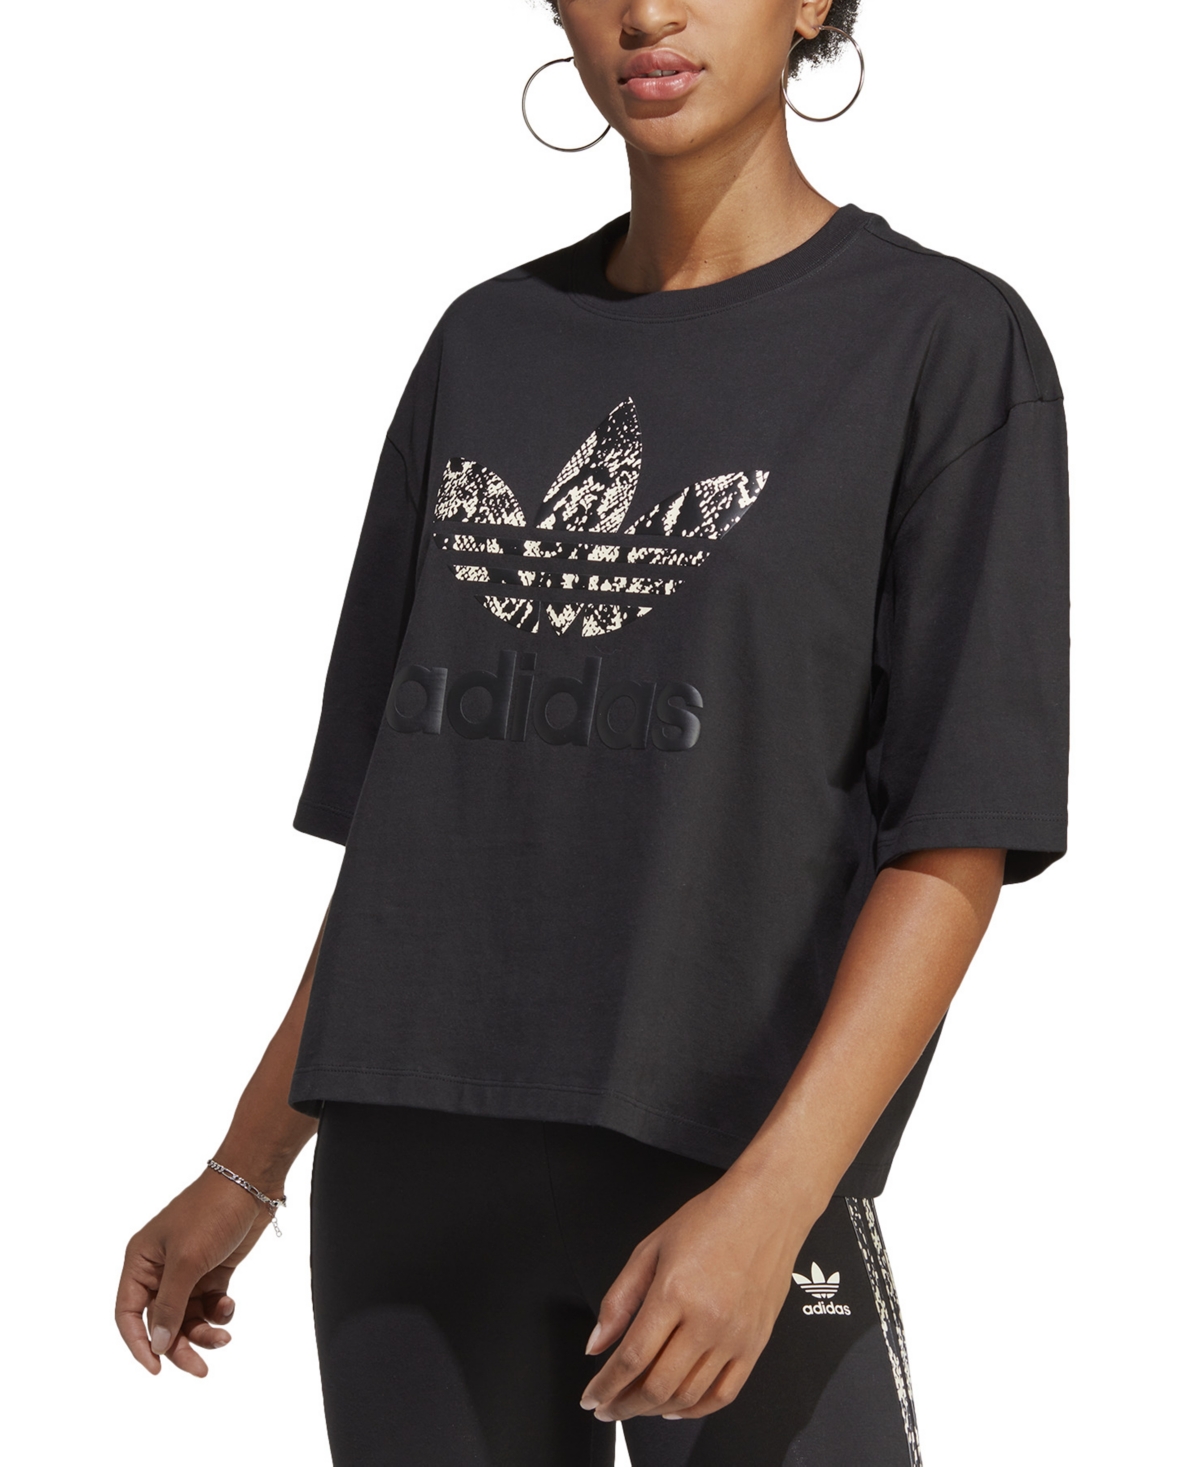  adidas Originals Women's Cotton Graphic T-shirt